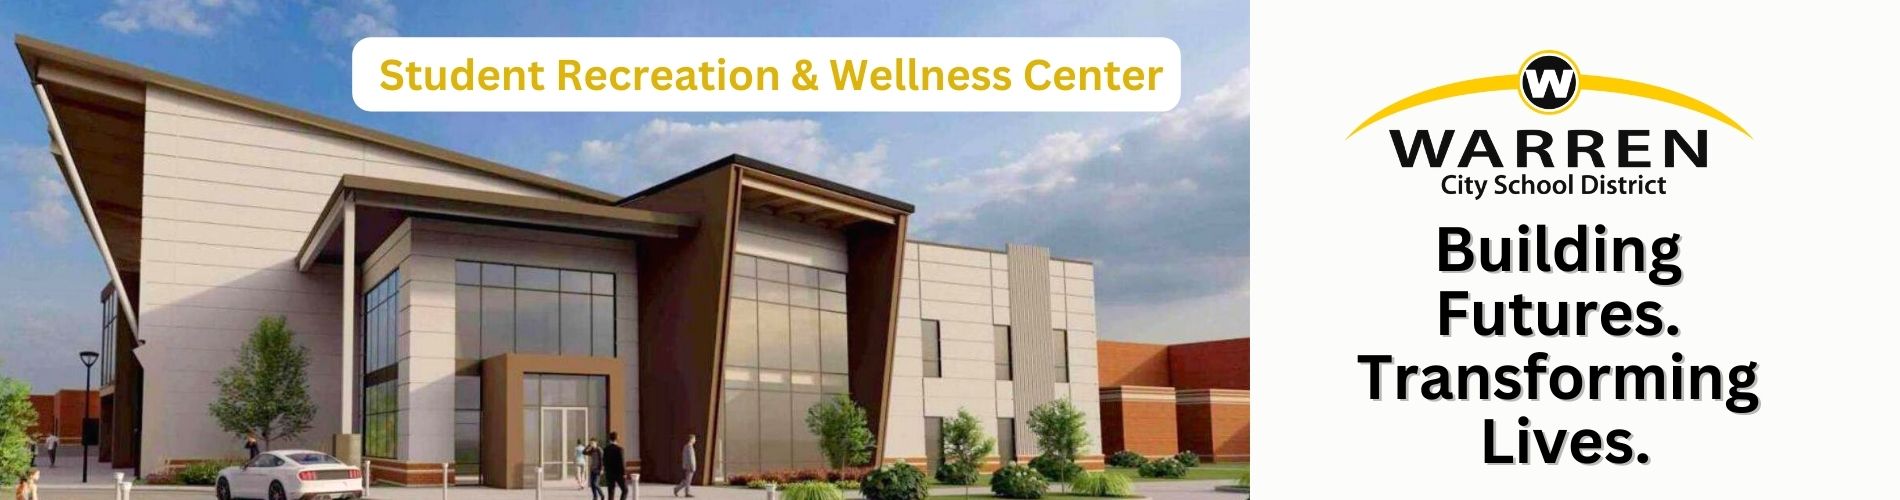 Studenet Recreation and Wellness center